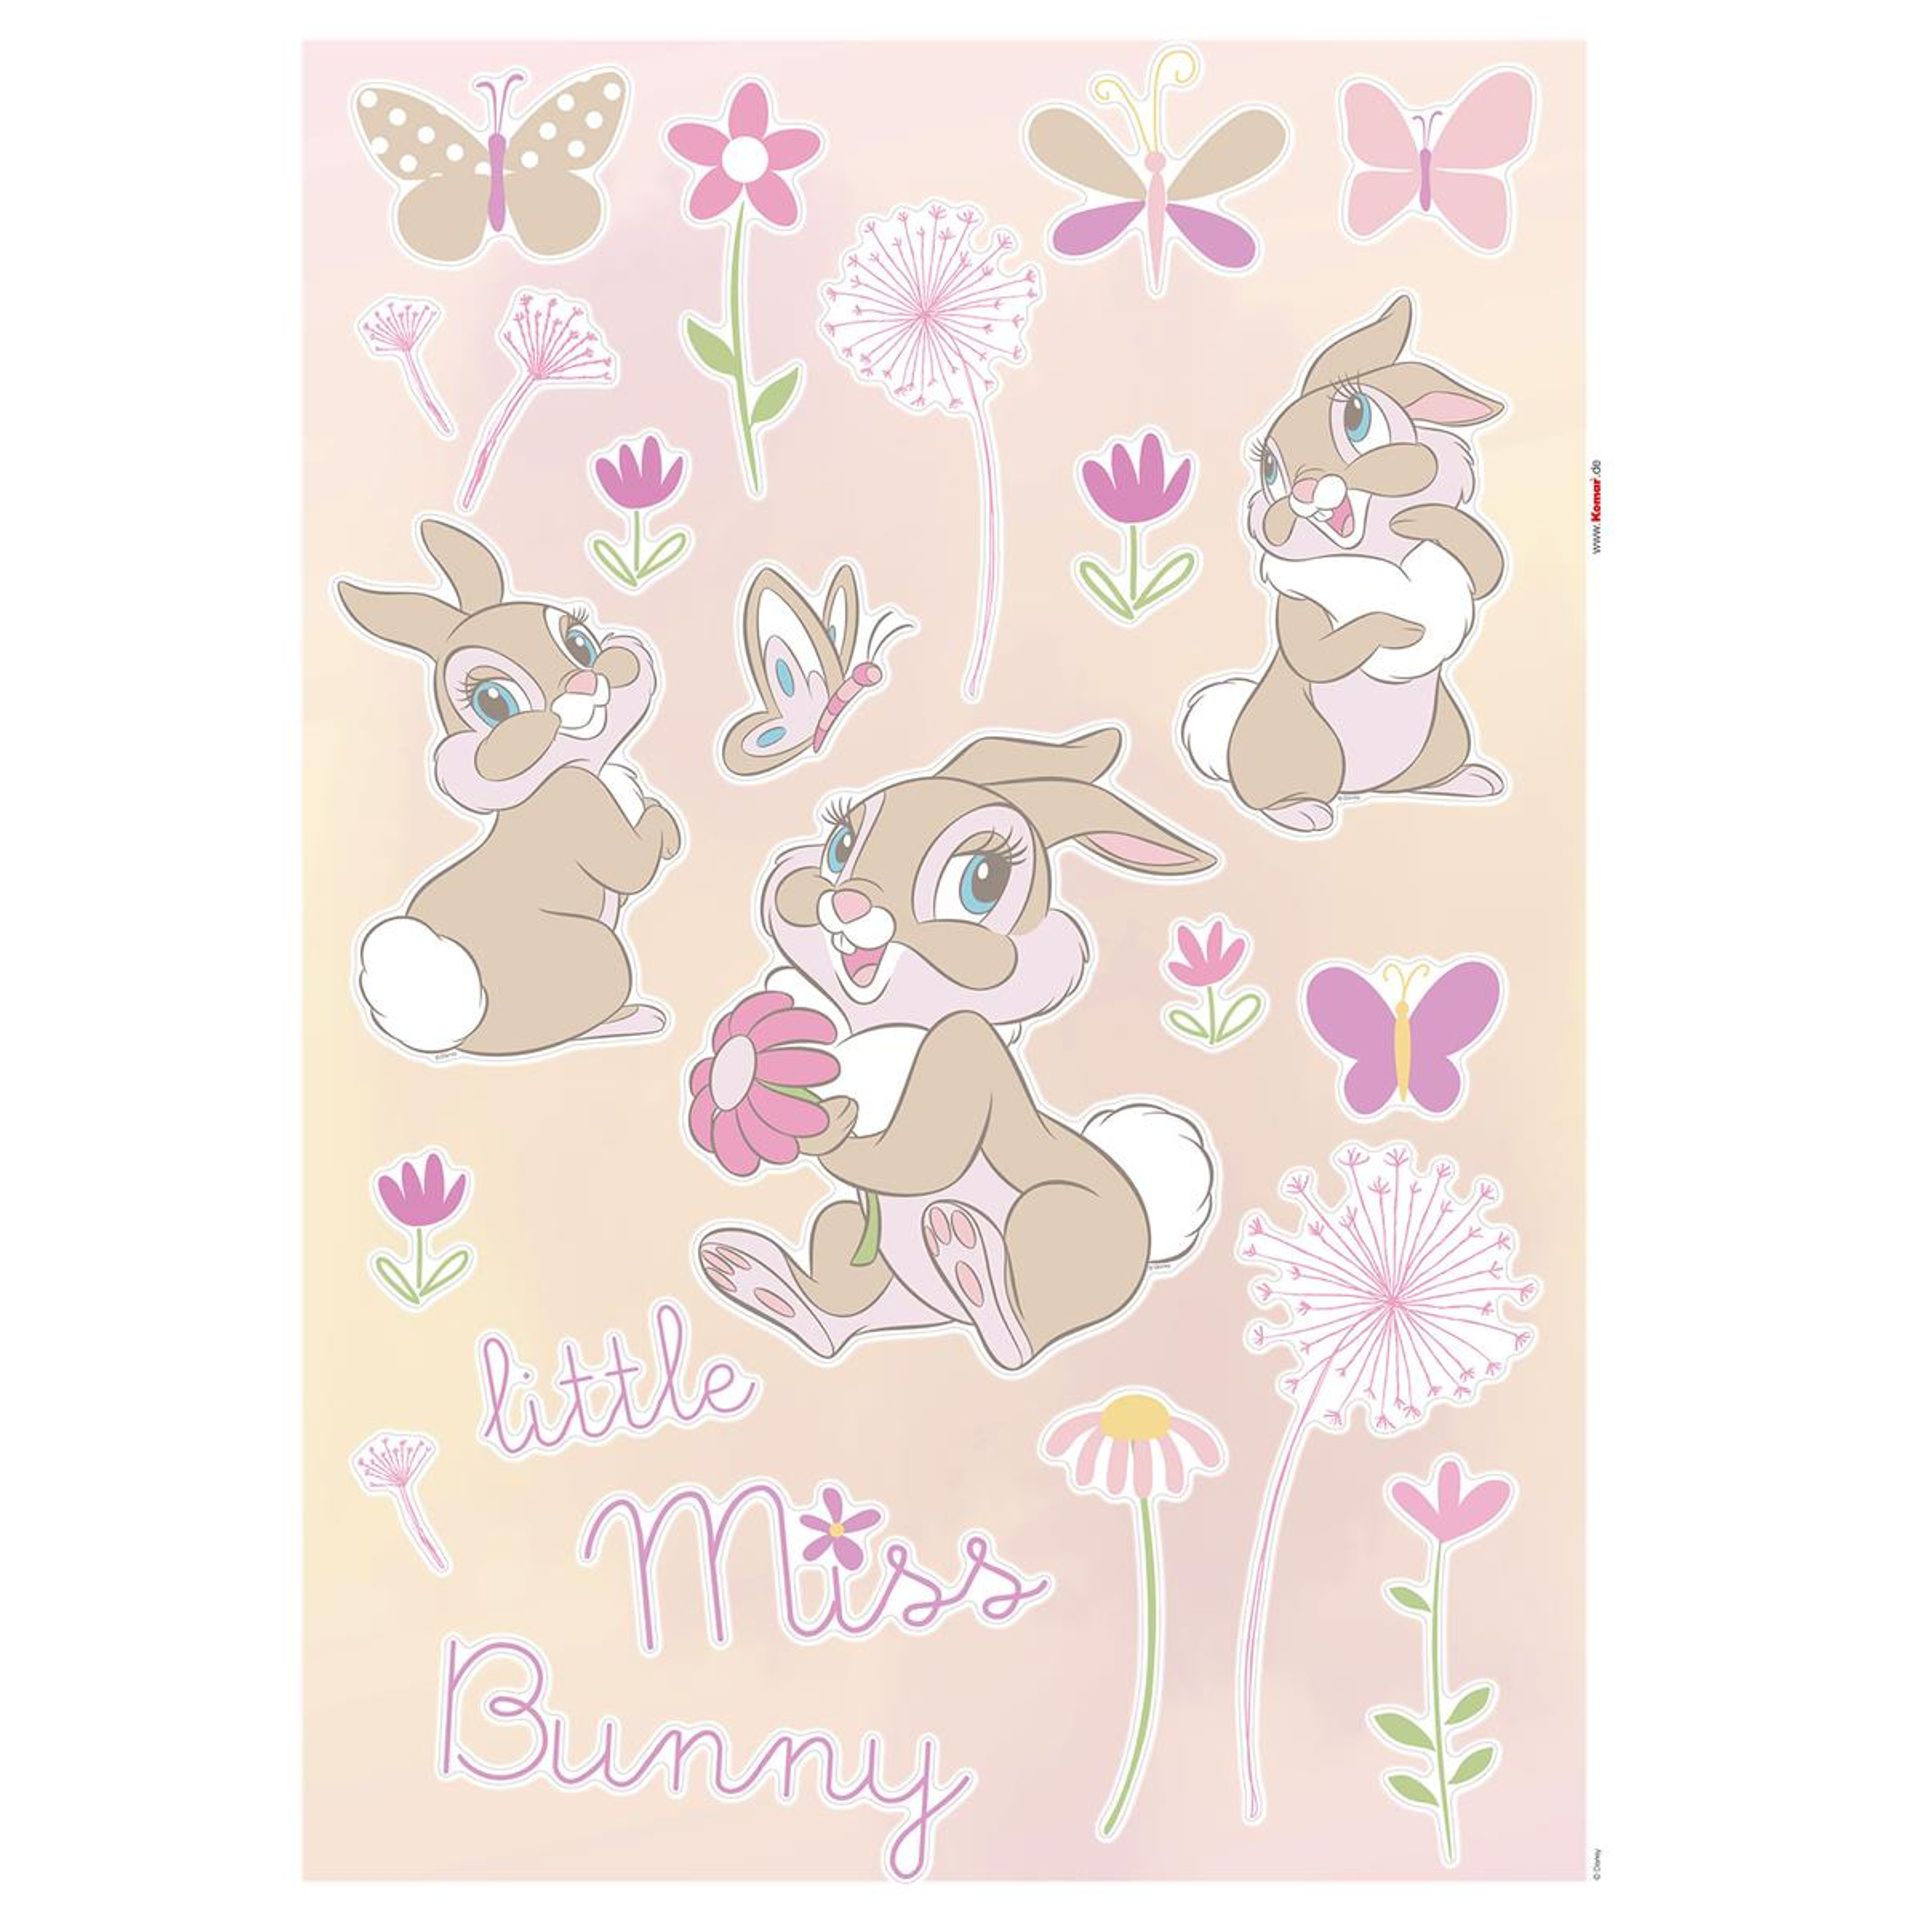 Wandtattoo - Little Miss Bunny  - Größe 50 x 70 cm